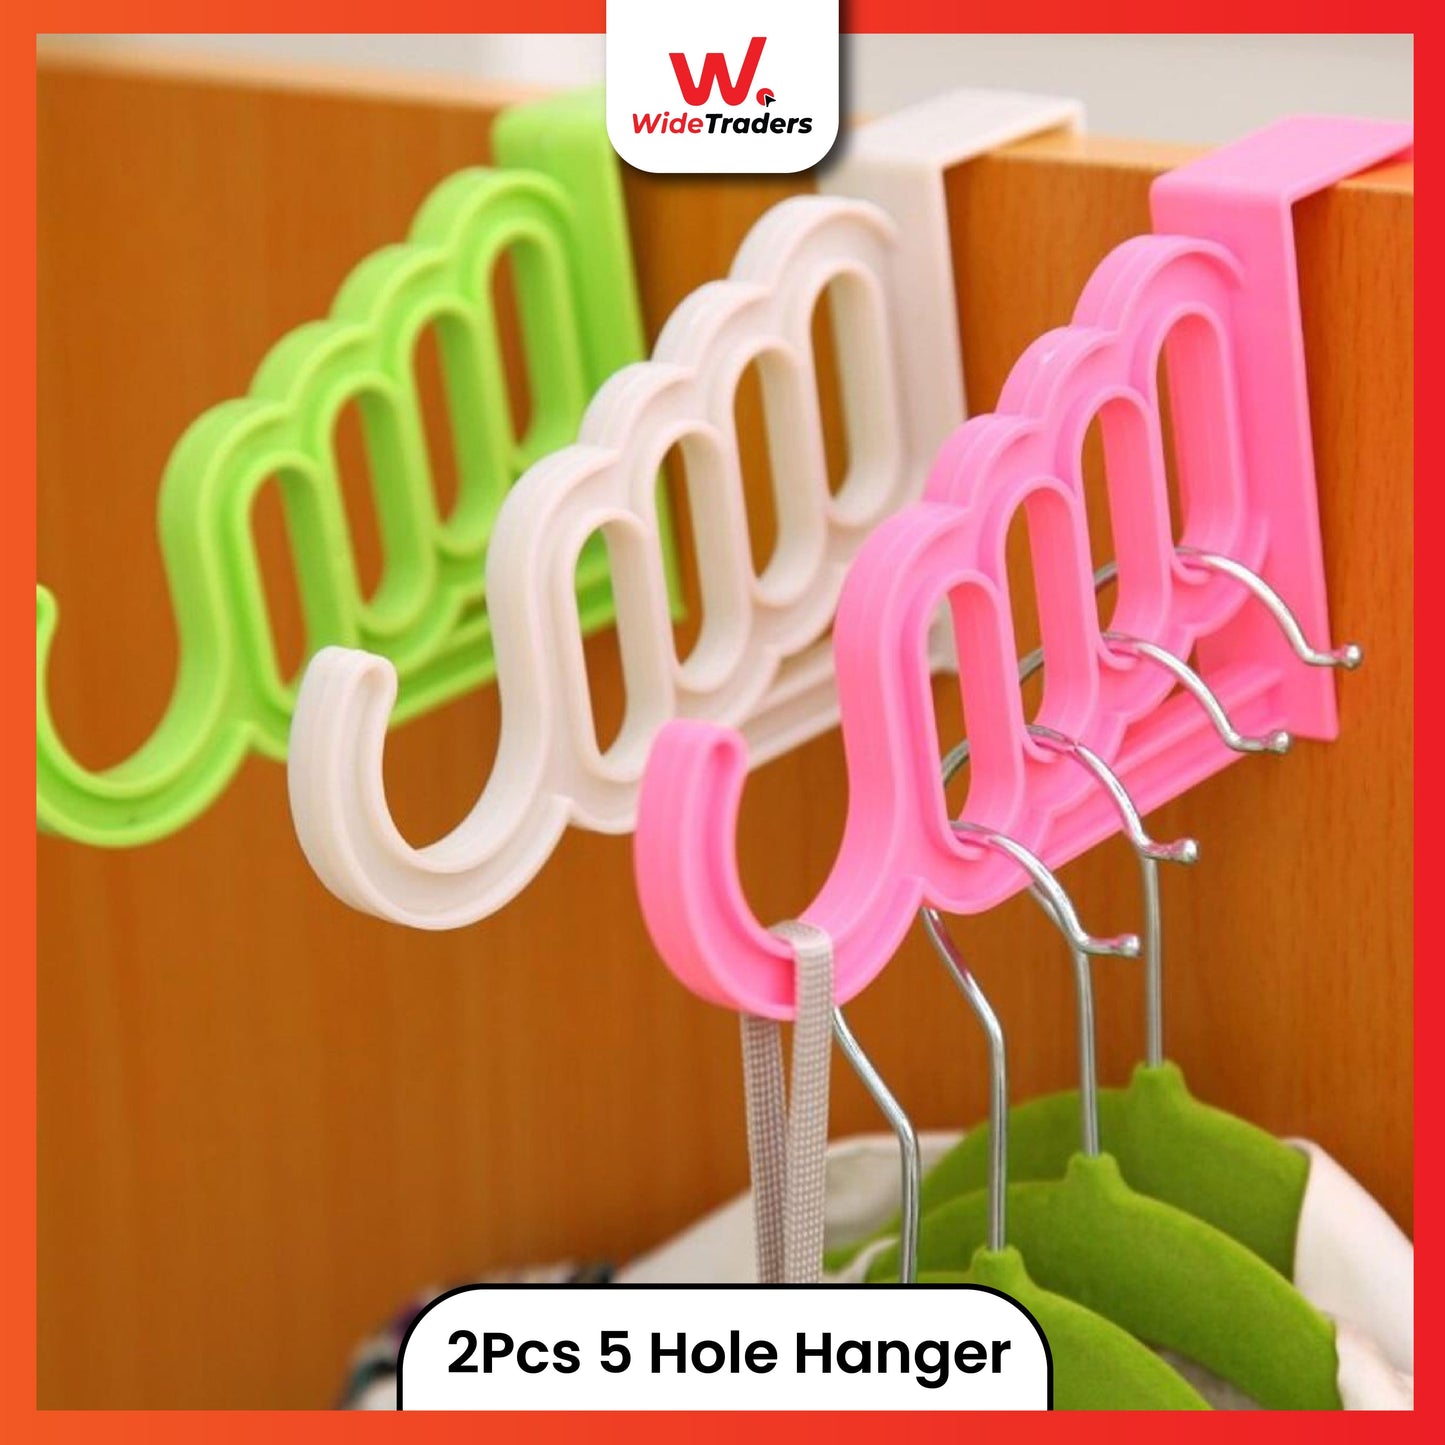 2Pcs 5 Hole Multi-Function Home Accessories Foldable Clothes Hanger